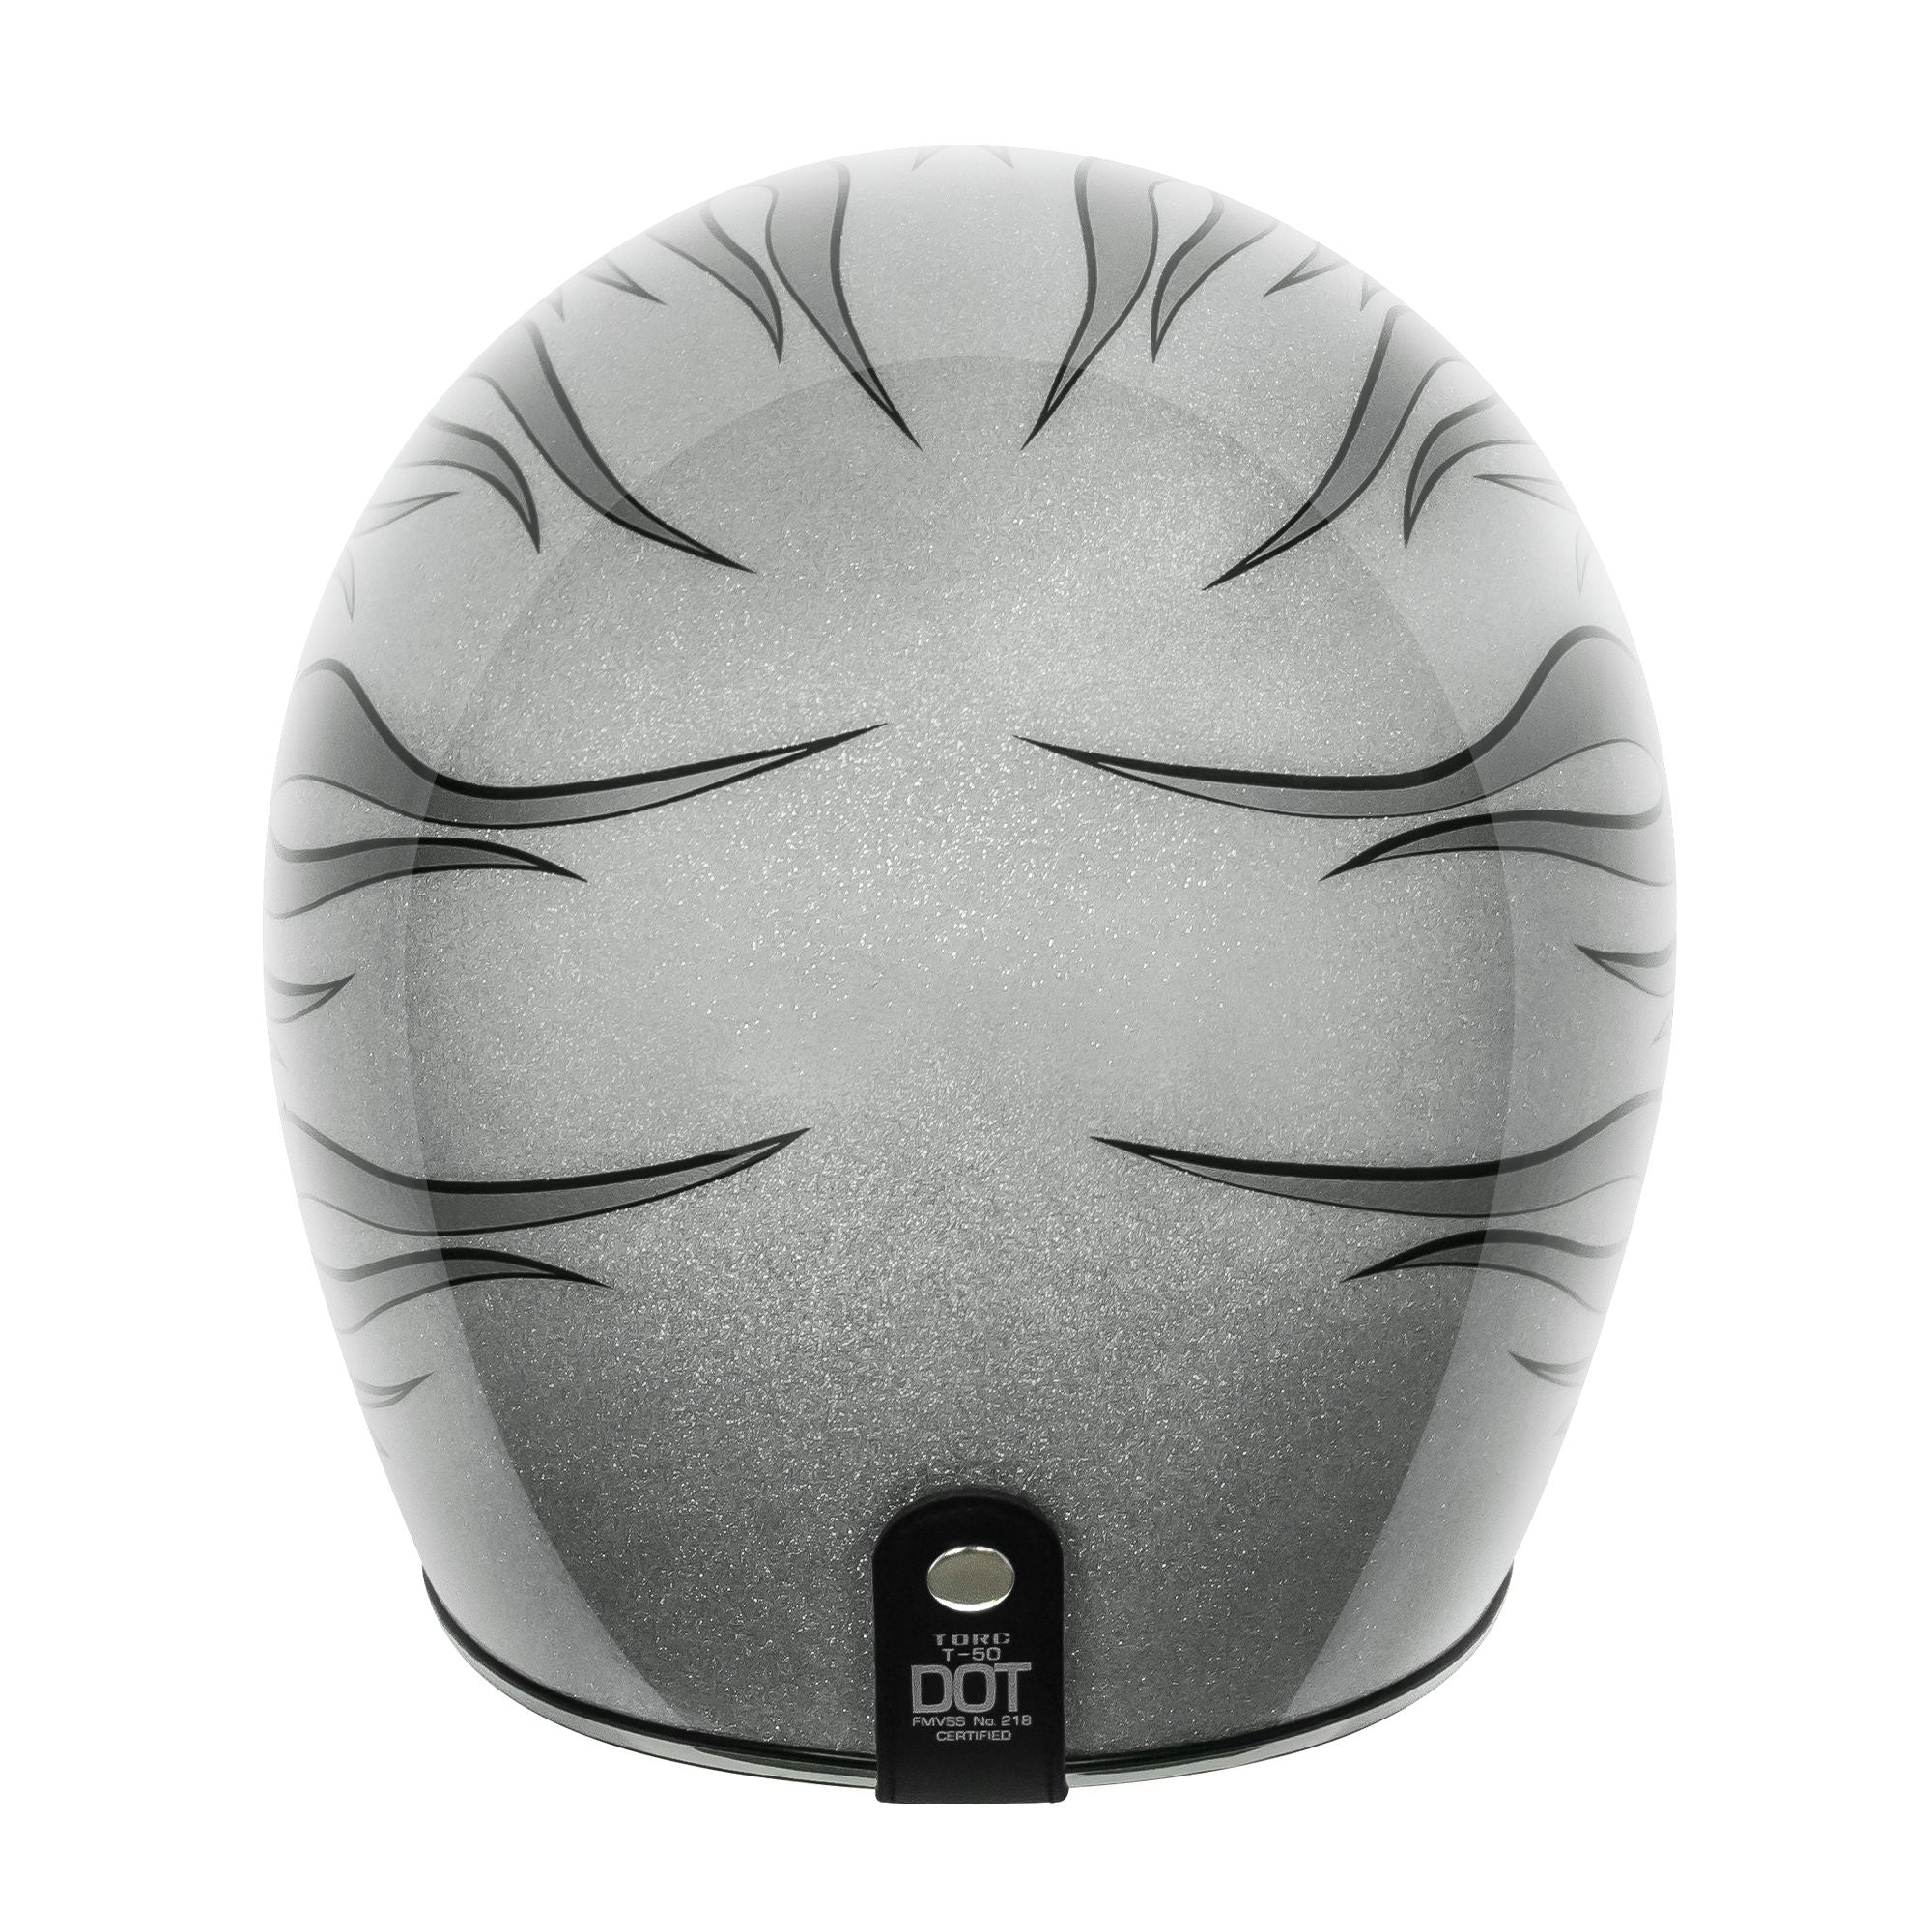 Torc T-50 3/4 Open Face Motorcycle Helmet (2 Colors)